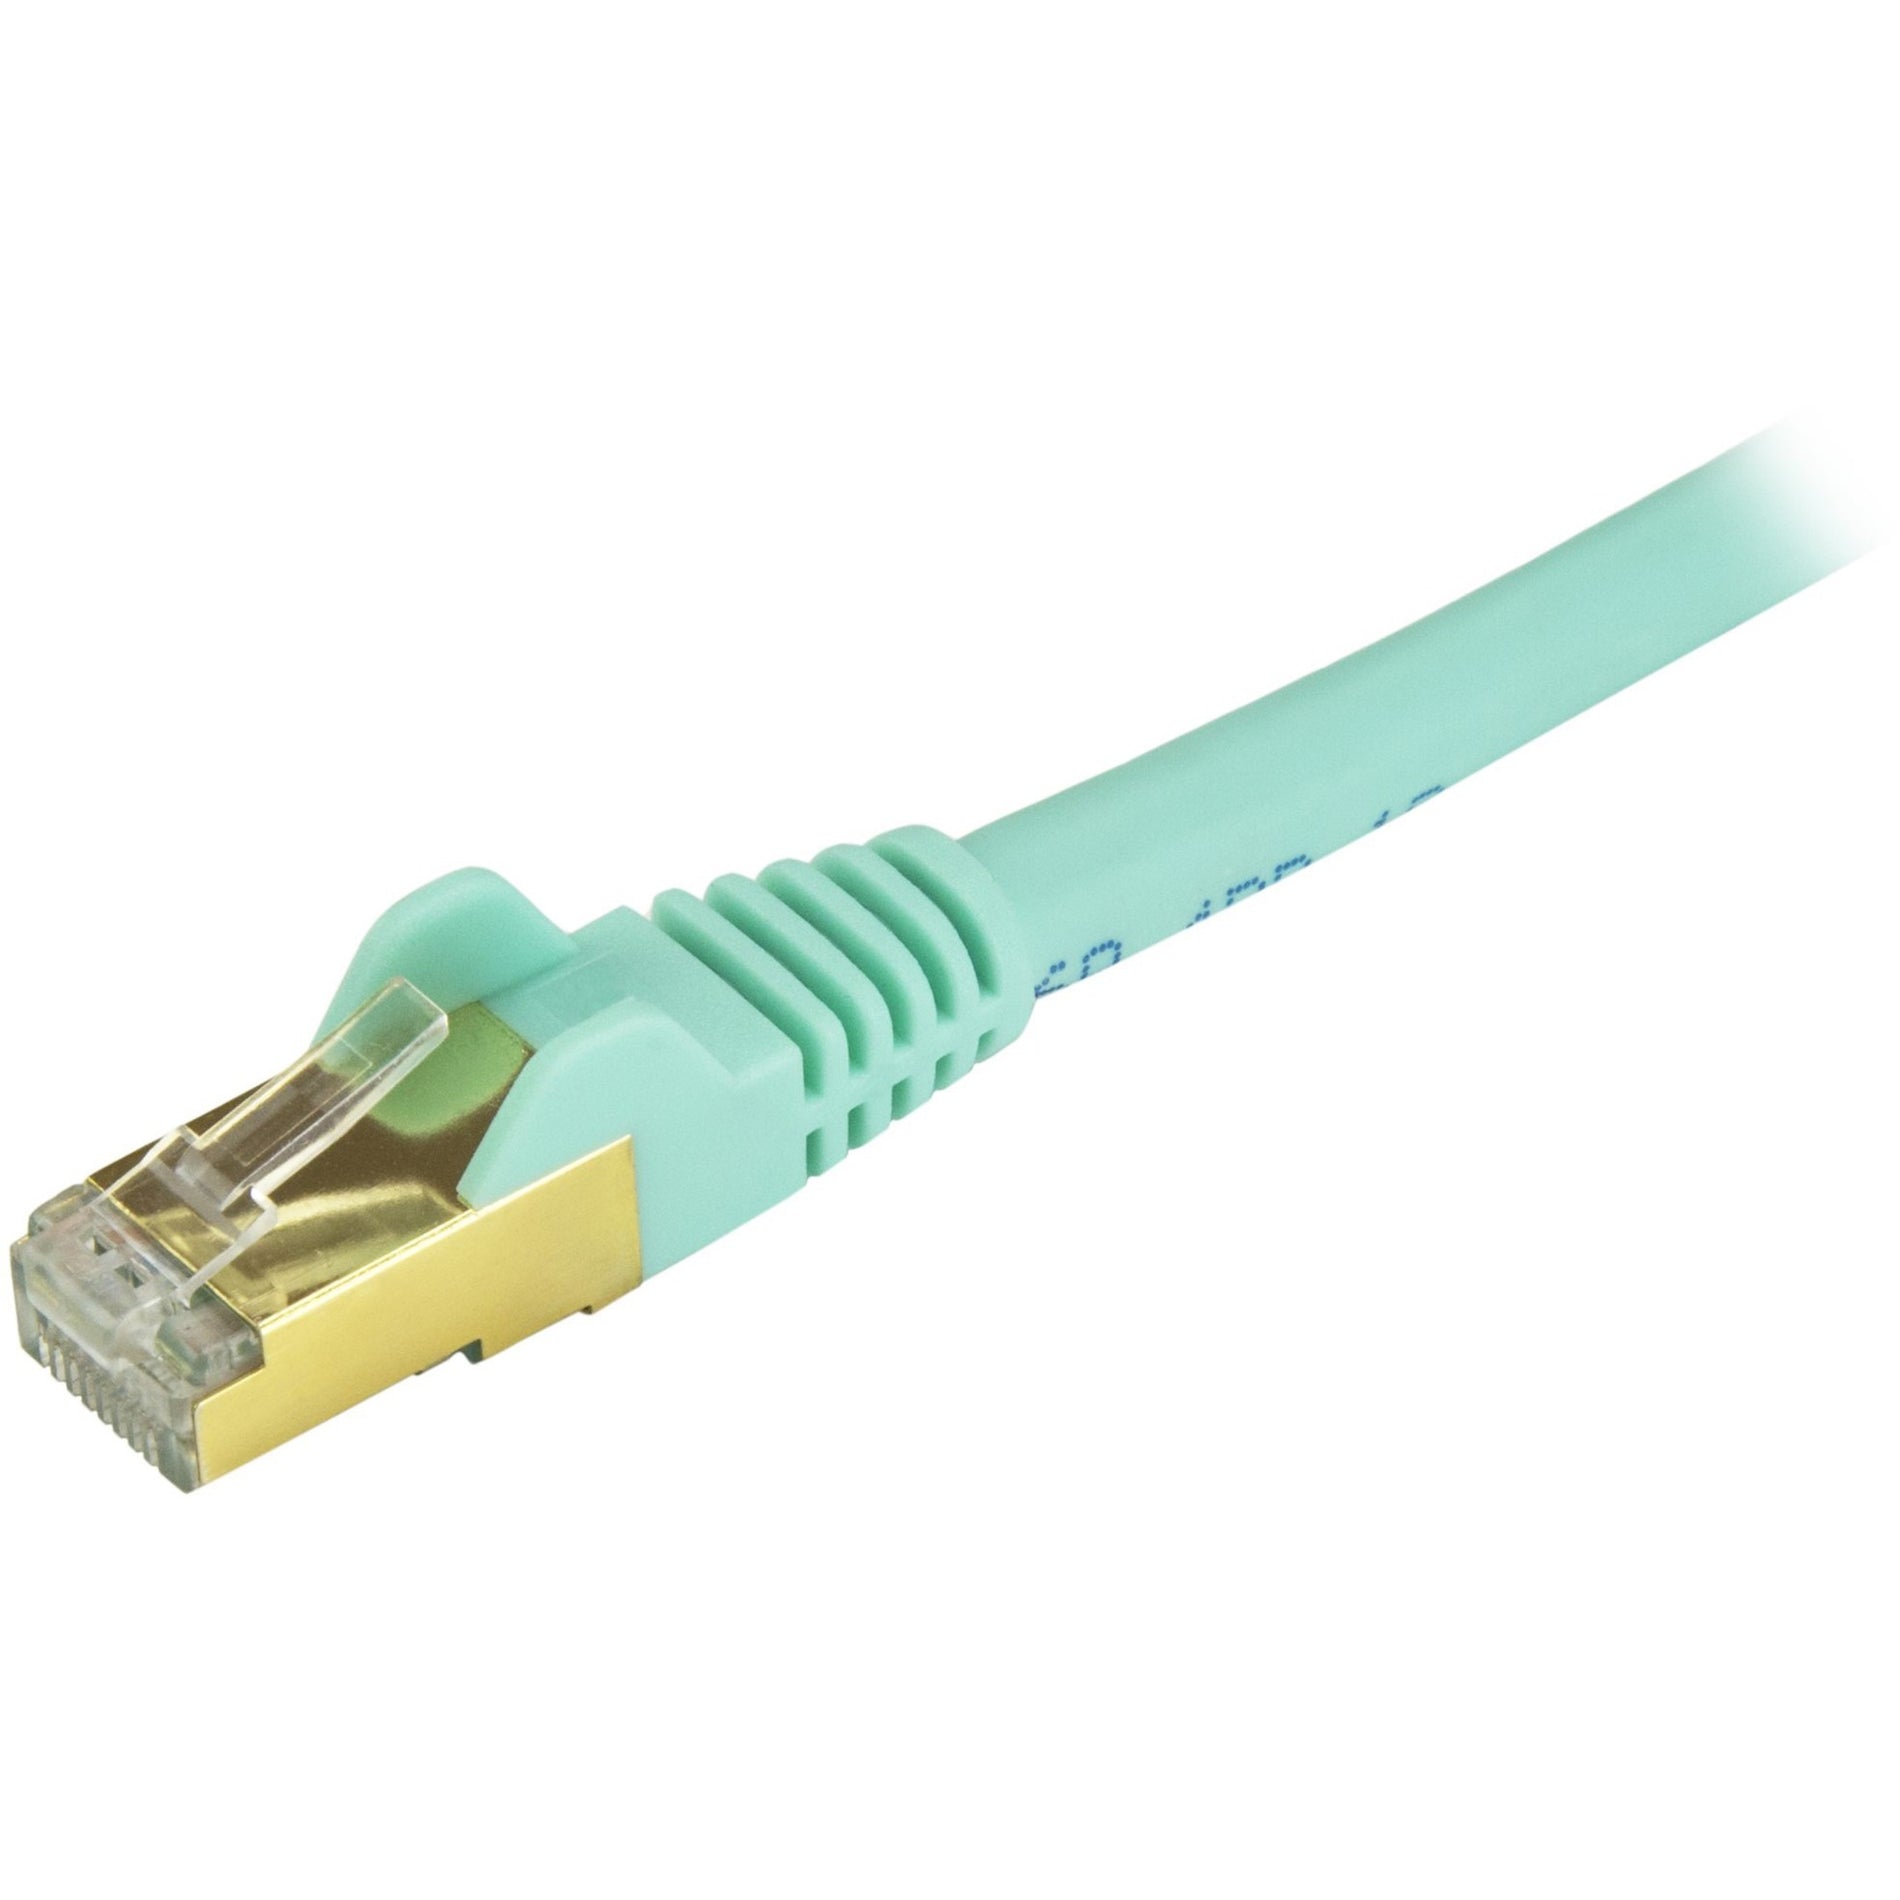 StarTech.com C6ASPAT10AQ Cat6a Ethernet Patch Cable - Shielded (STP) - 10 ft. Aqua Snagless RJ45 Ethernet Cord